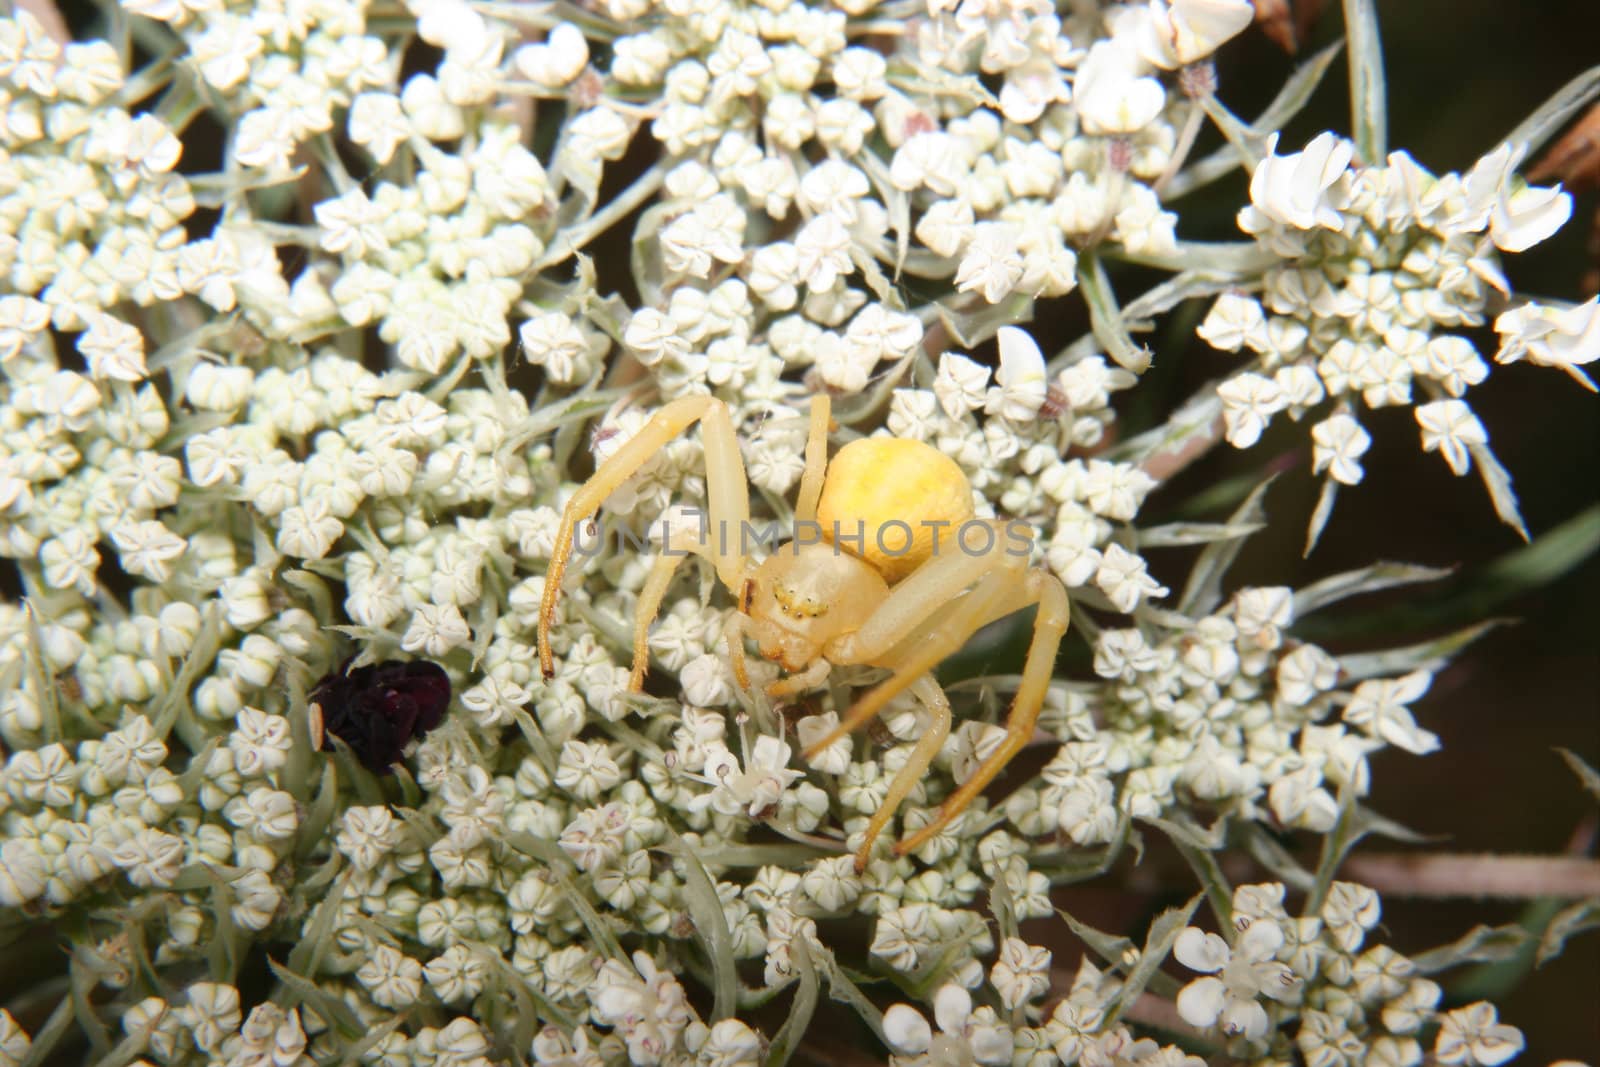 Goldenrod crab spider (Misumena vatia) by tdietrich